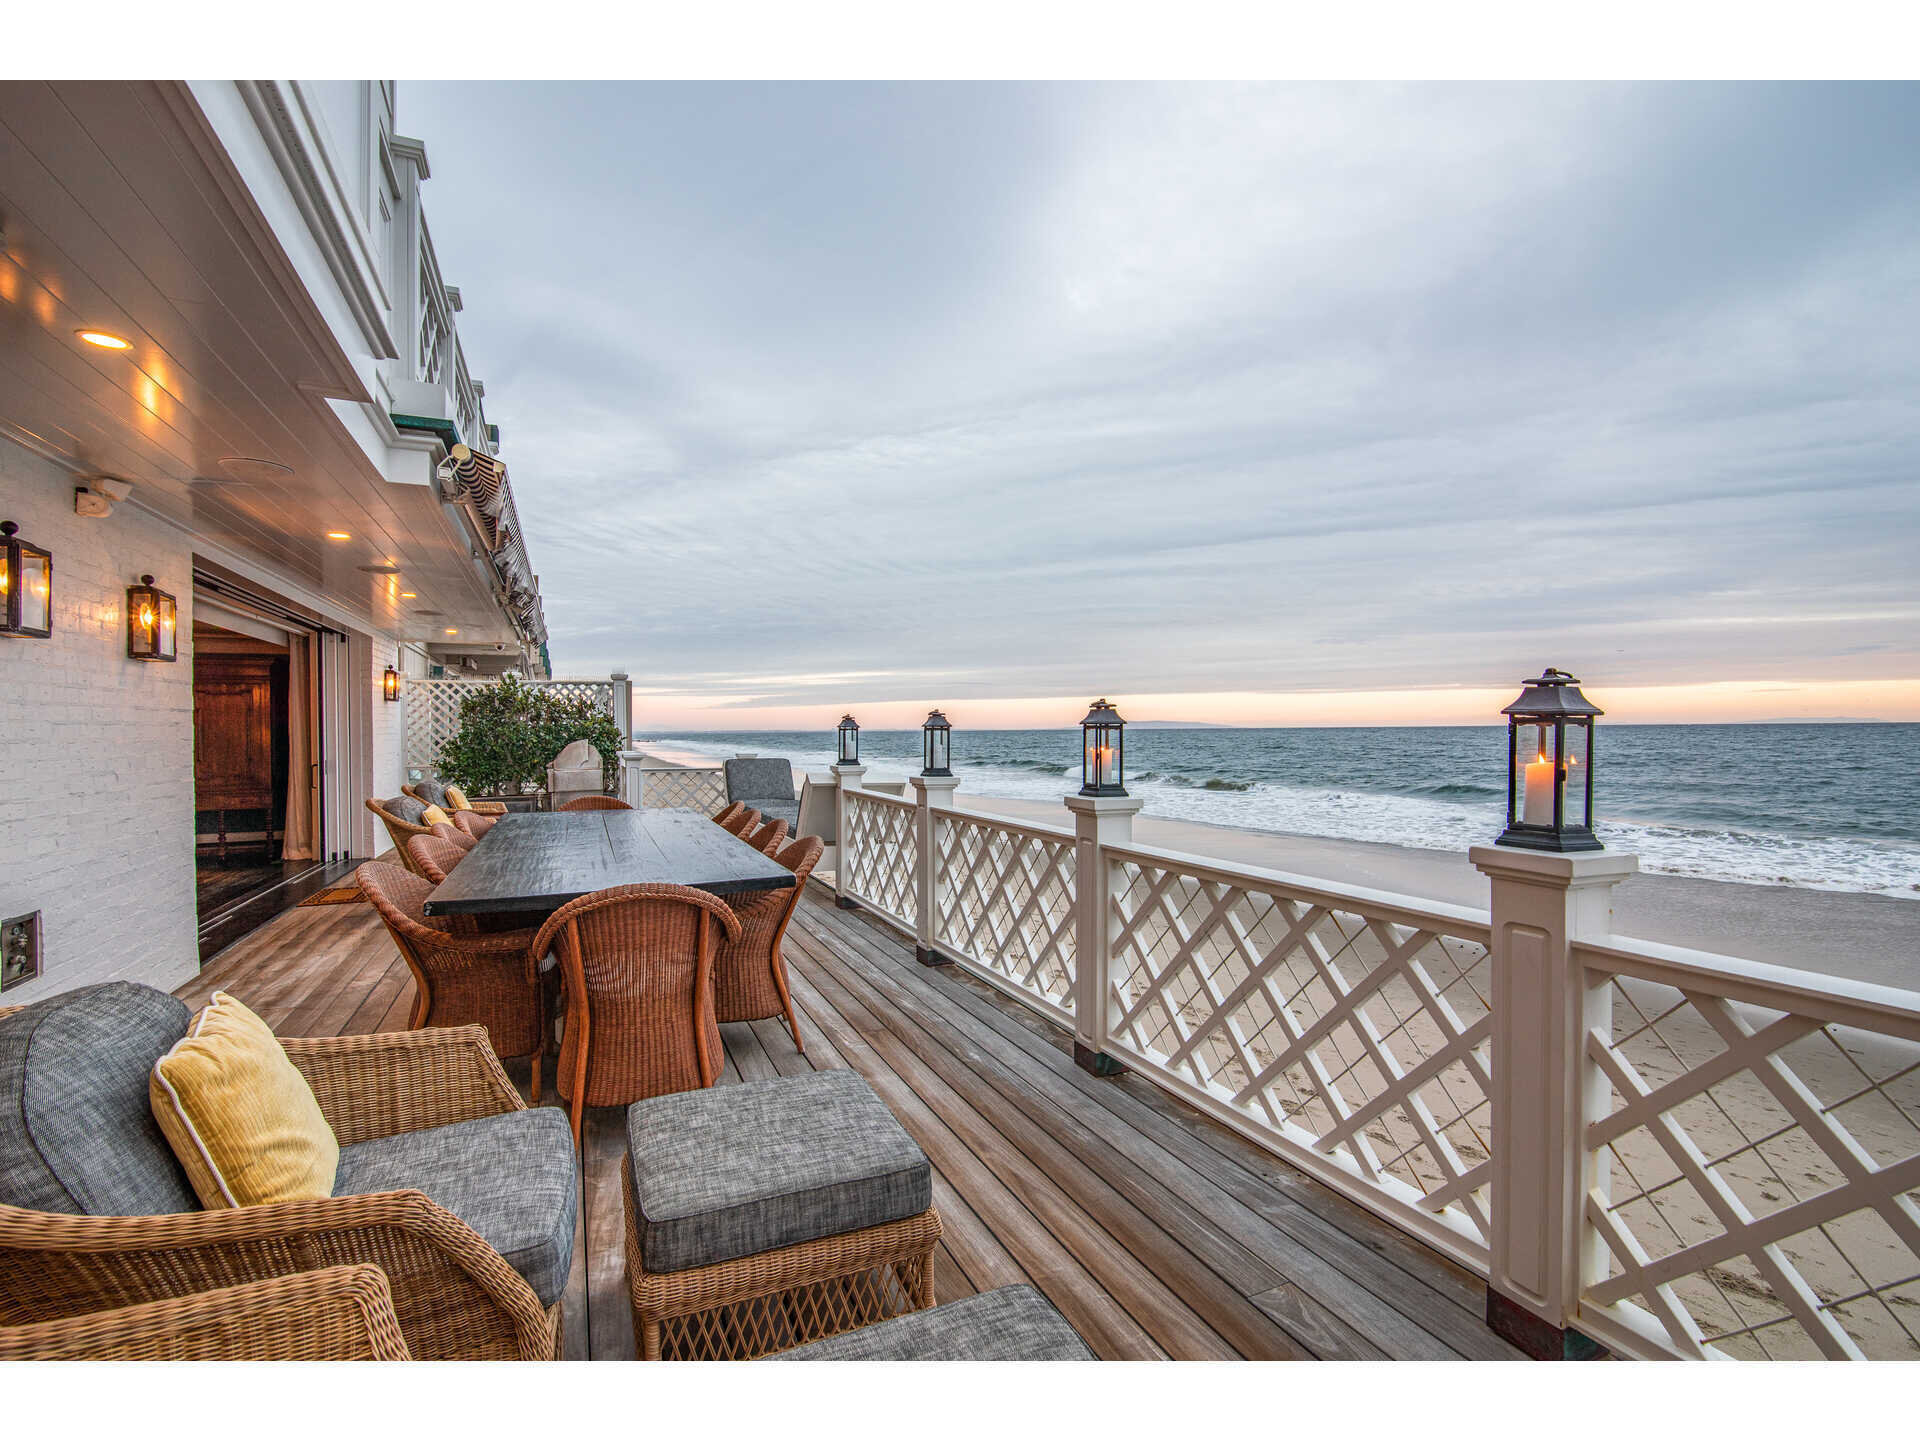 Francis York A Resort Developer’s Oceanfront Malibu Mansion26.jpg